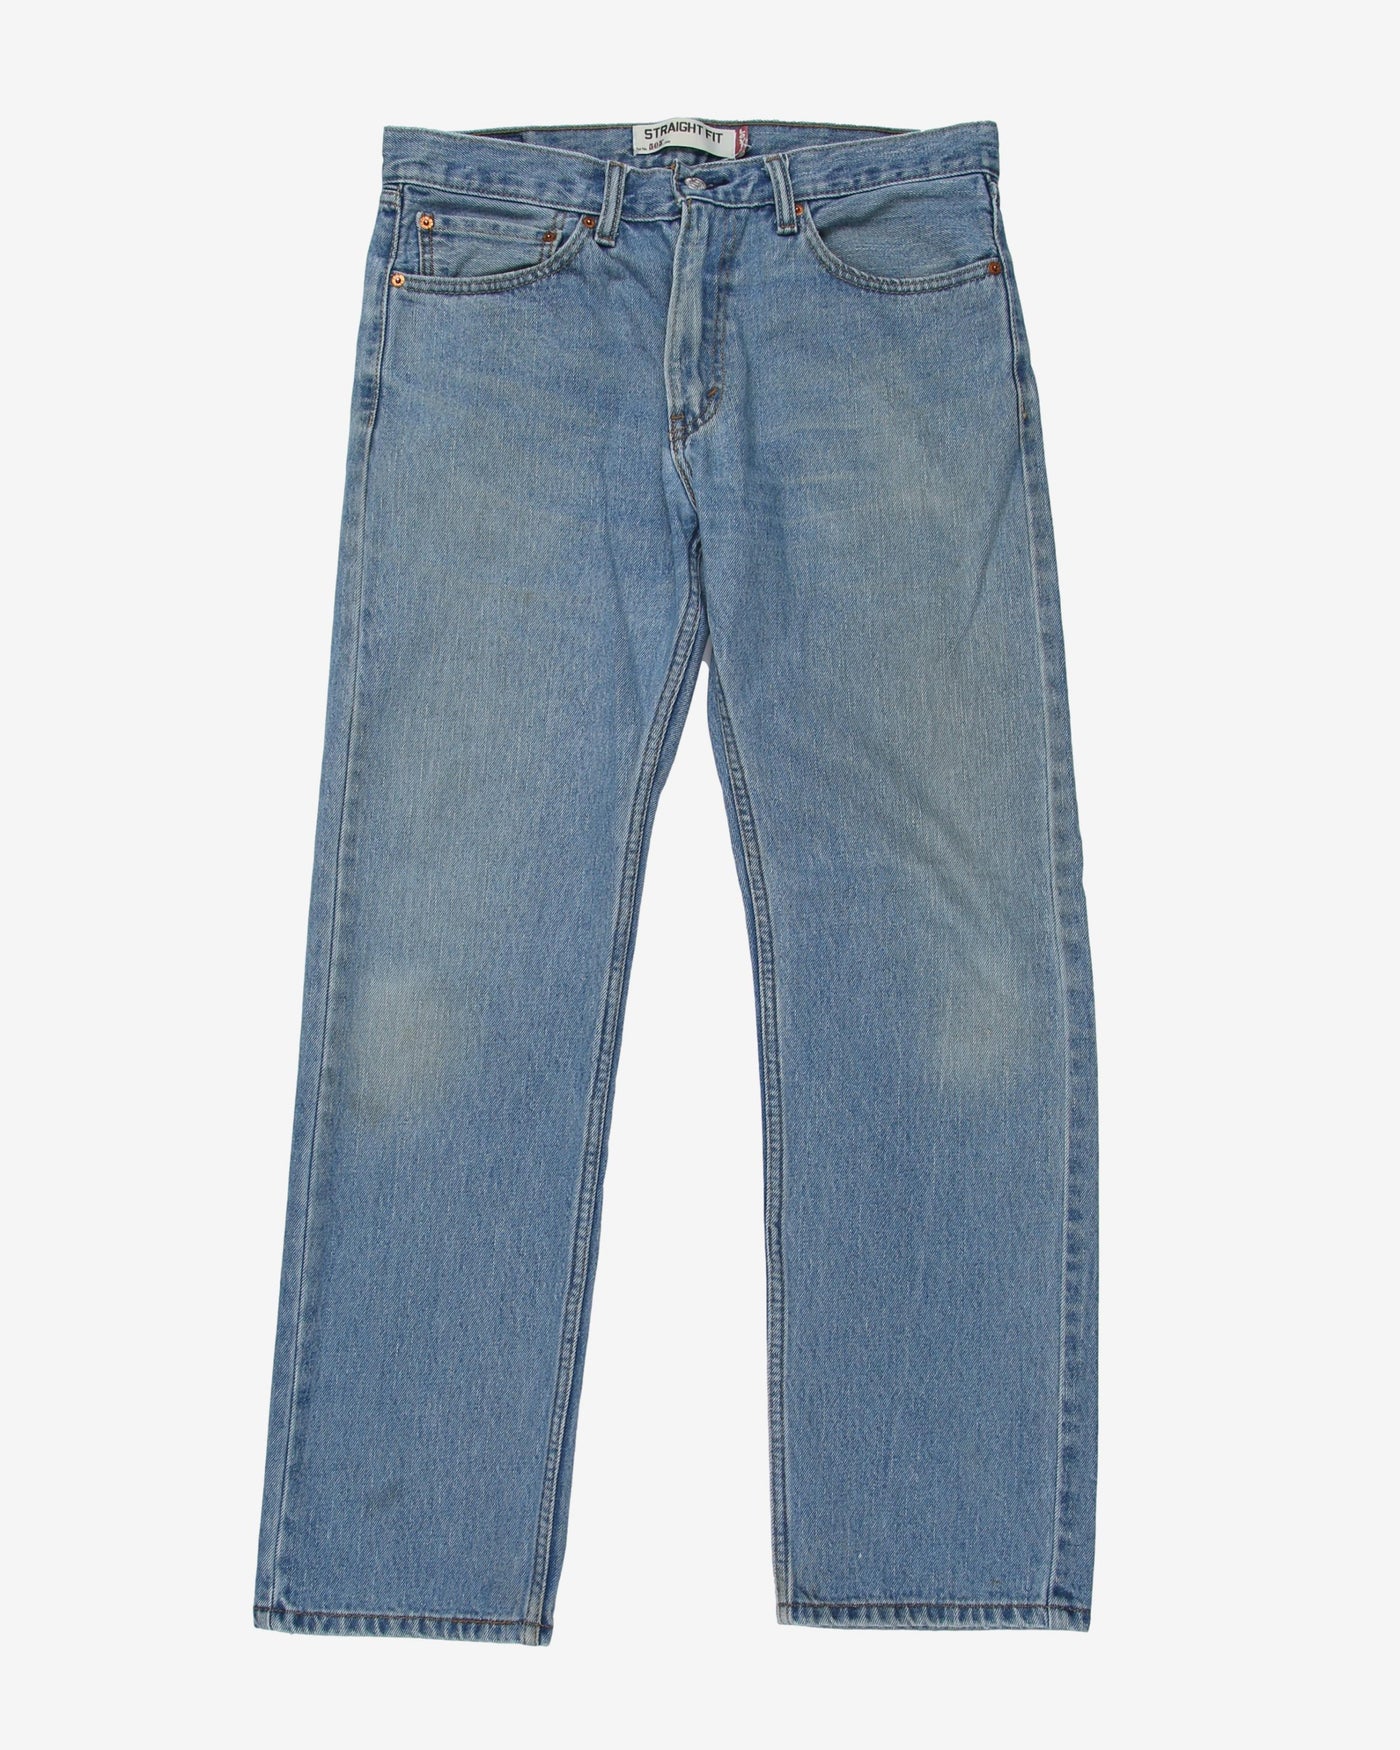 Levi's 505 Denim Light Blue Stonewash Jeans - W35 L29